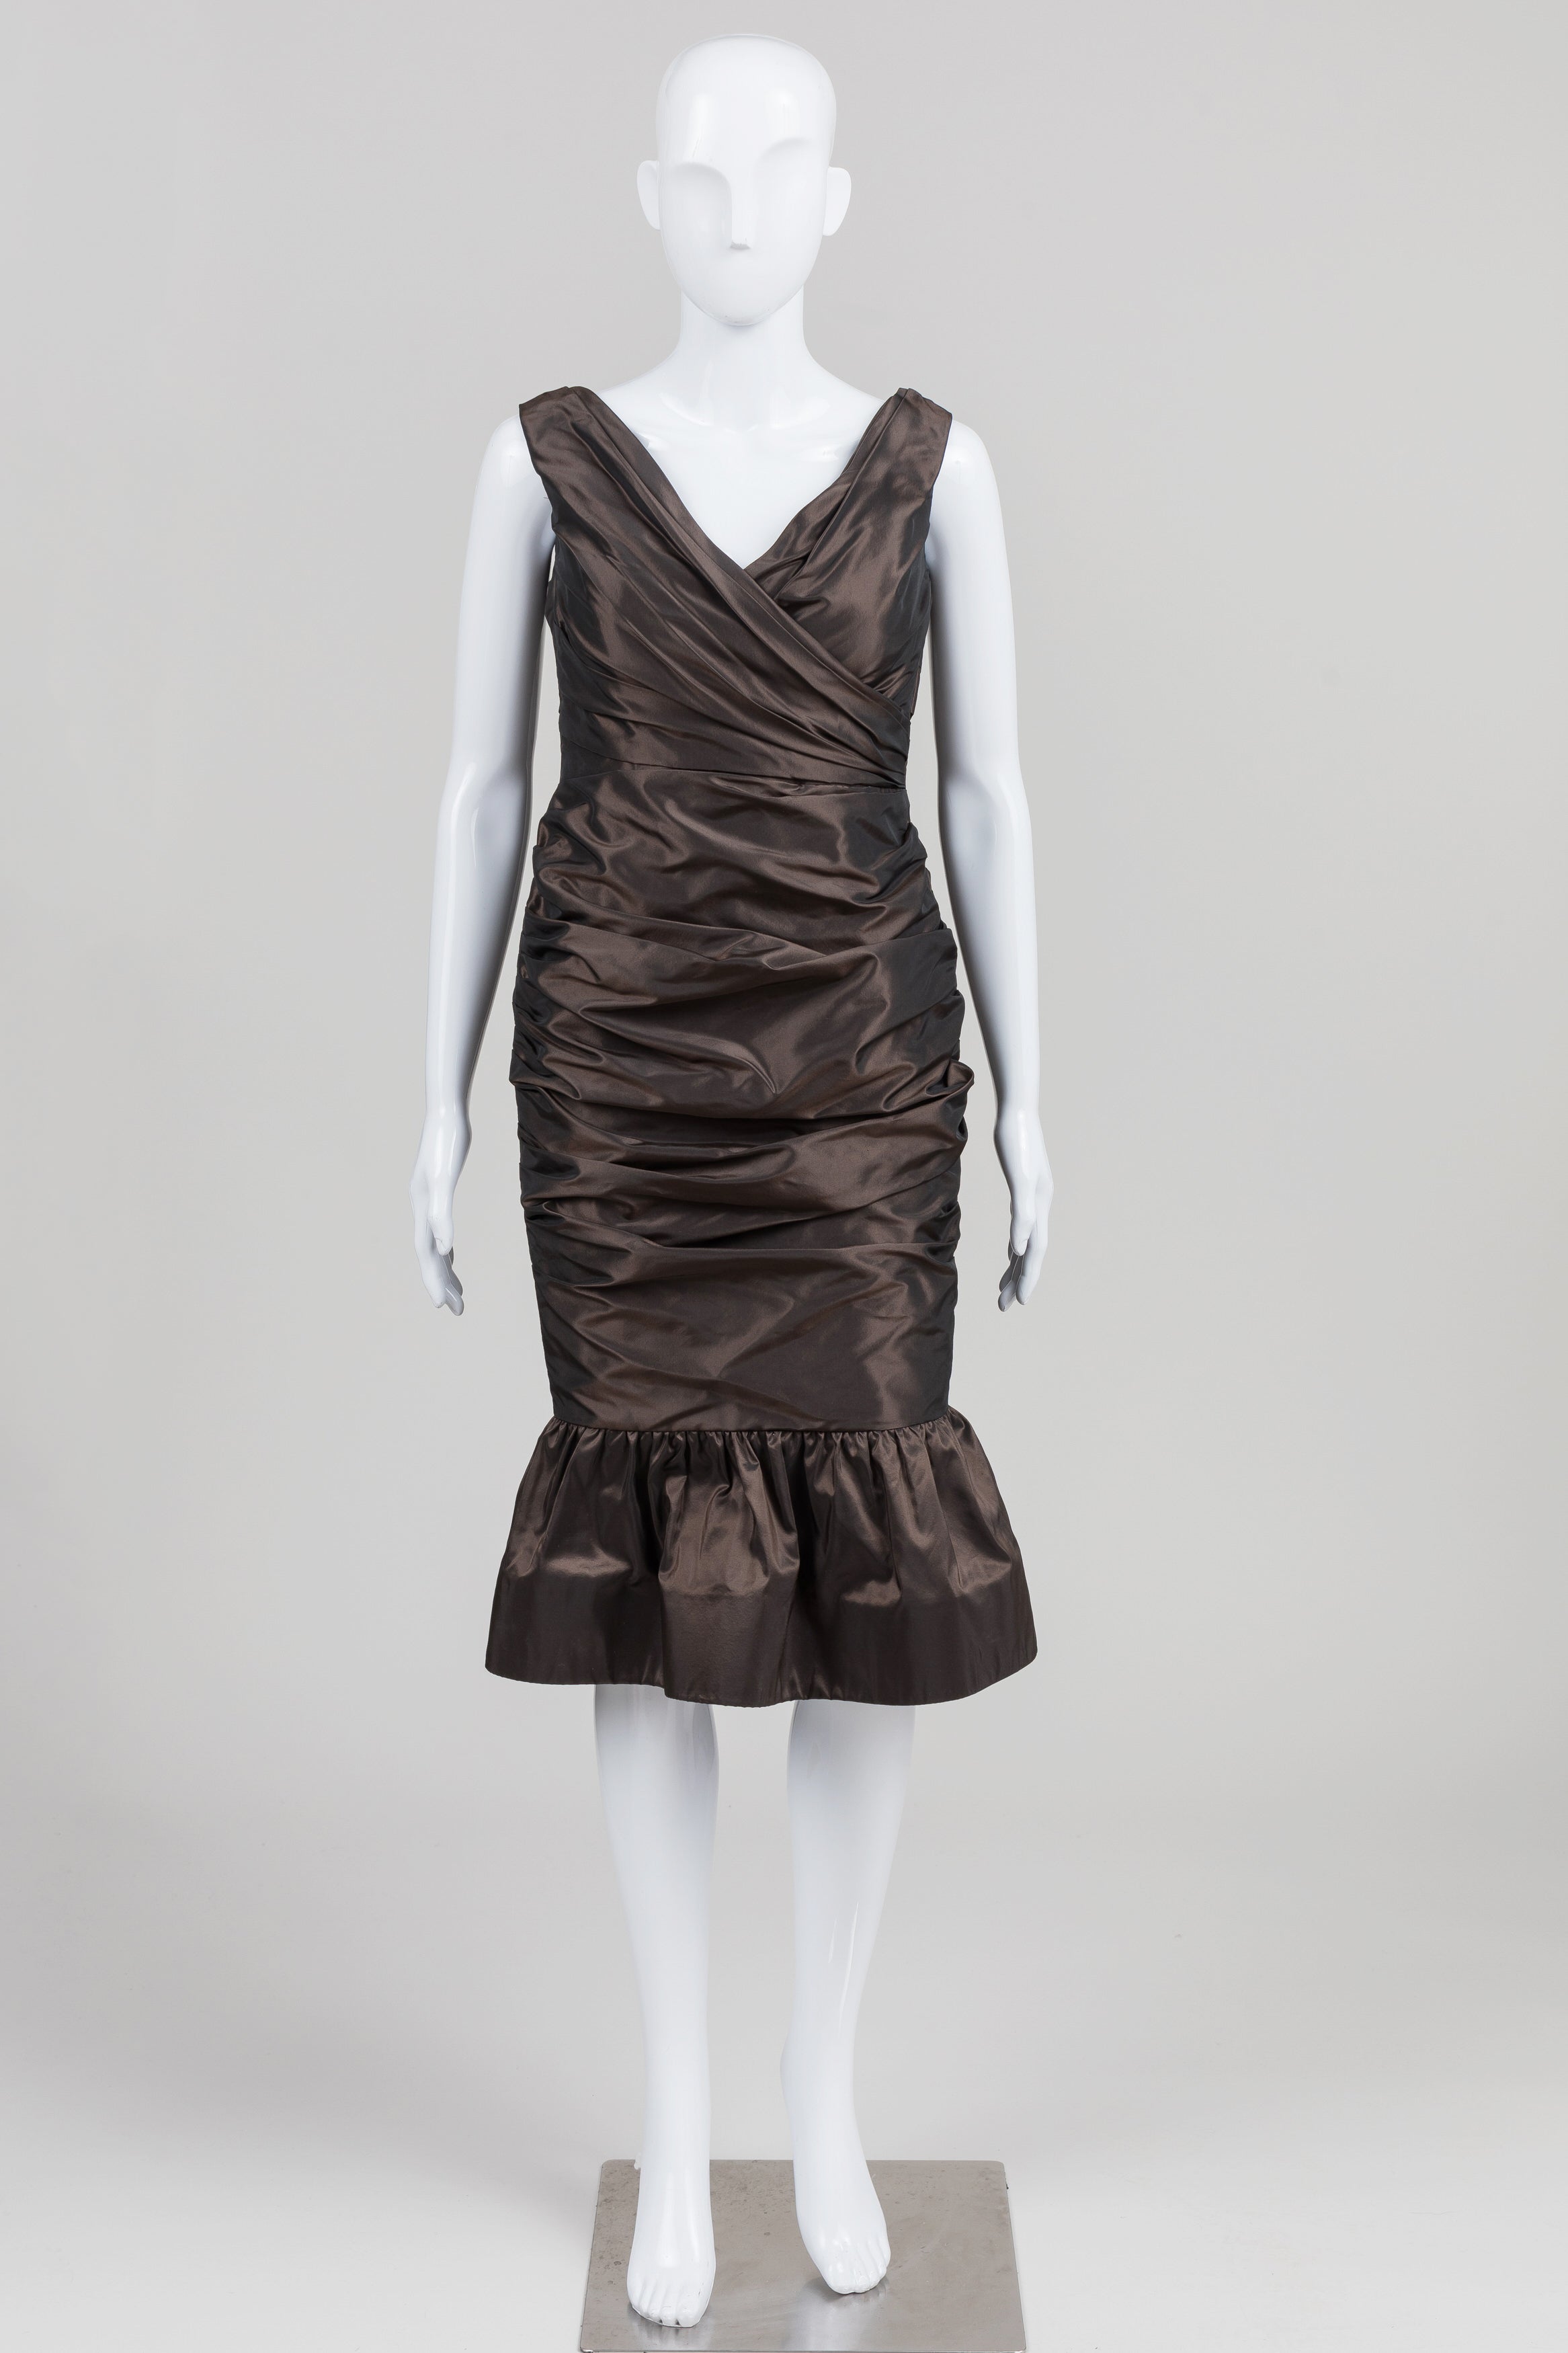 Catherine Regehr Vintage Brown/Grey Iridescent Silk Mermaid Dress (S)